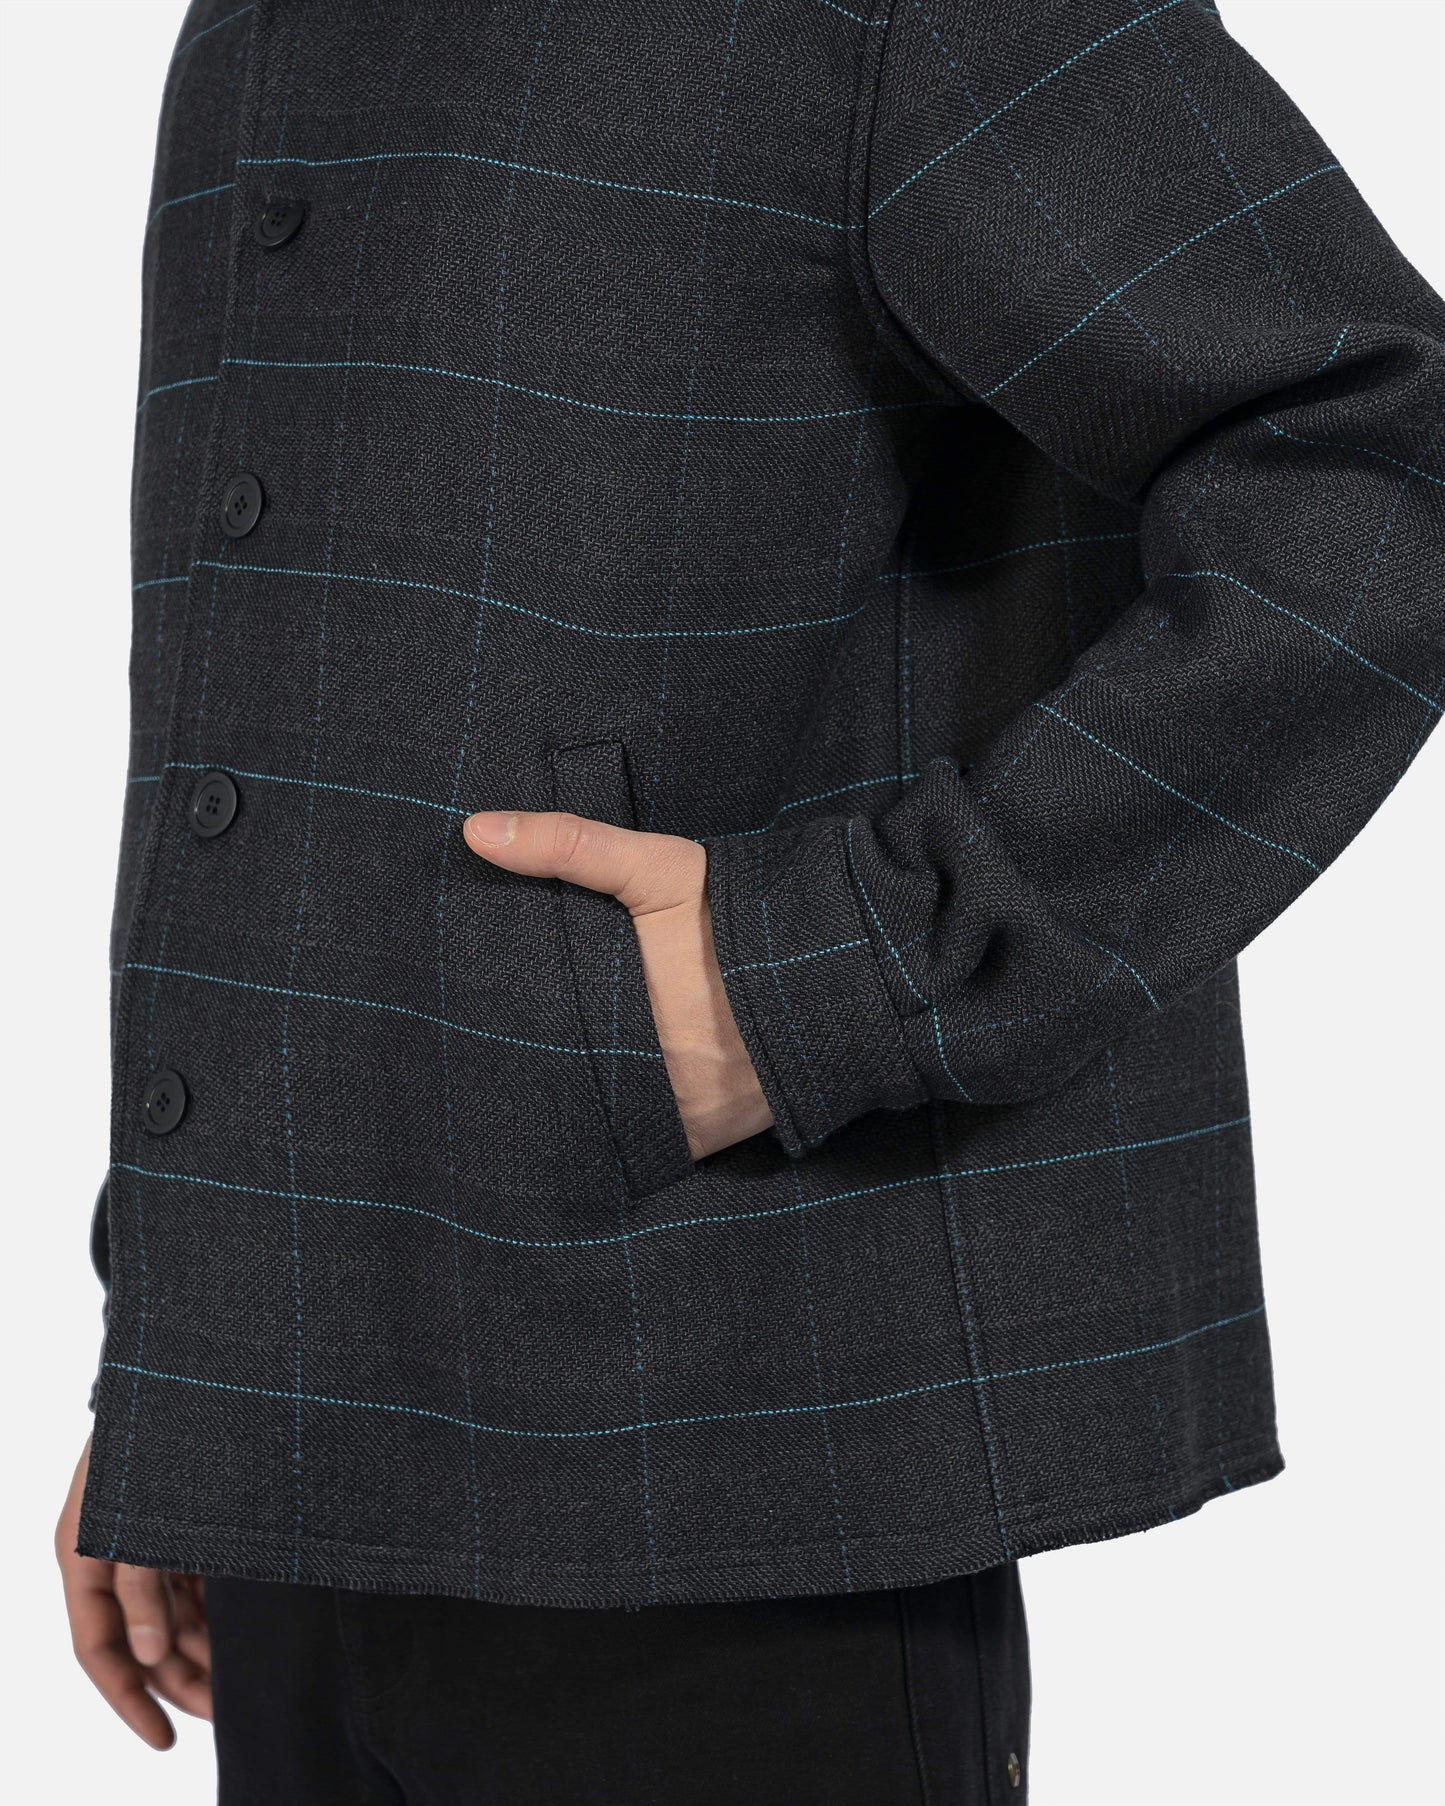 John Elliott Men's Jackets Hemi Short Coat in Ambria Check